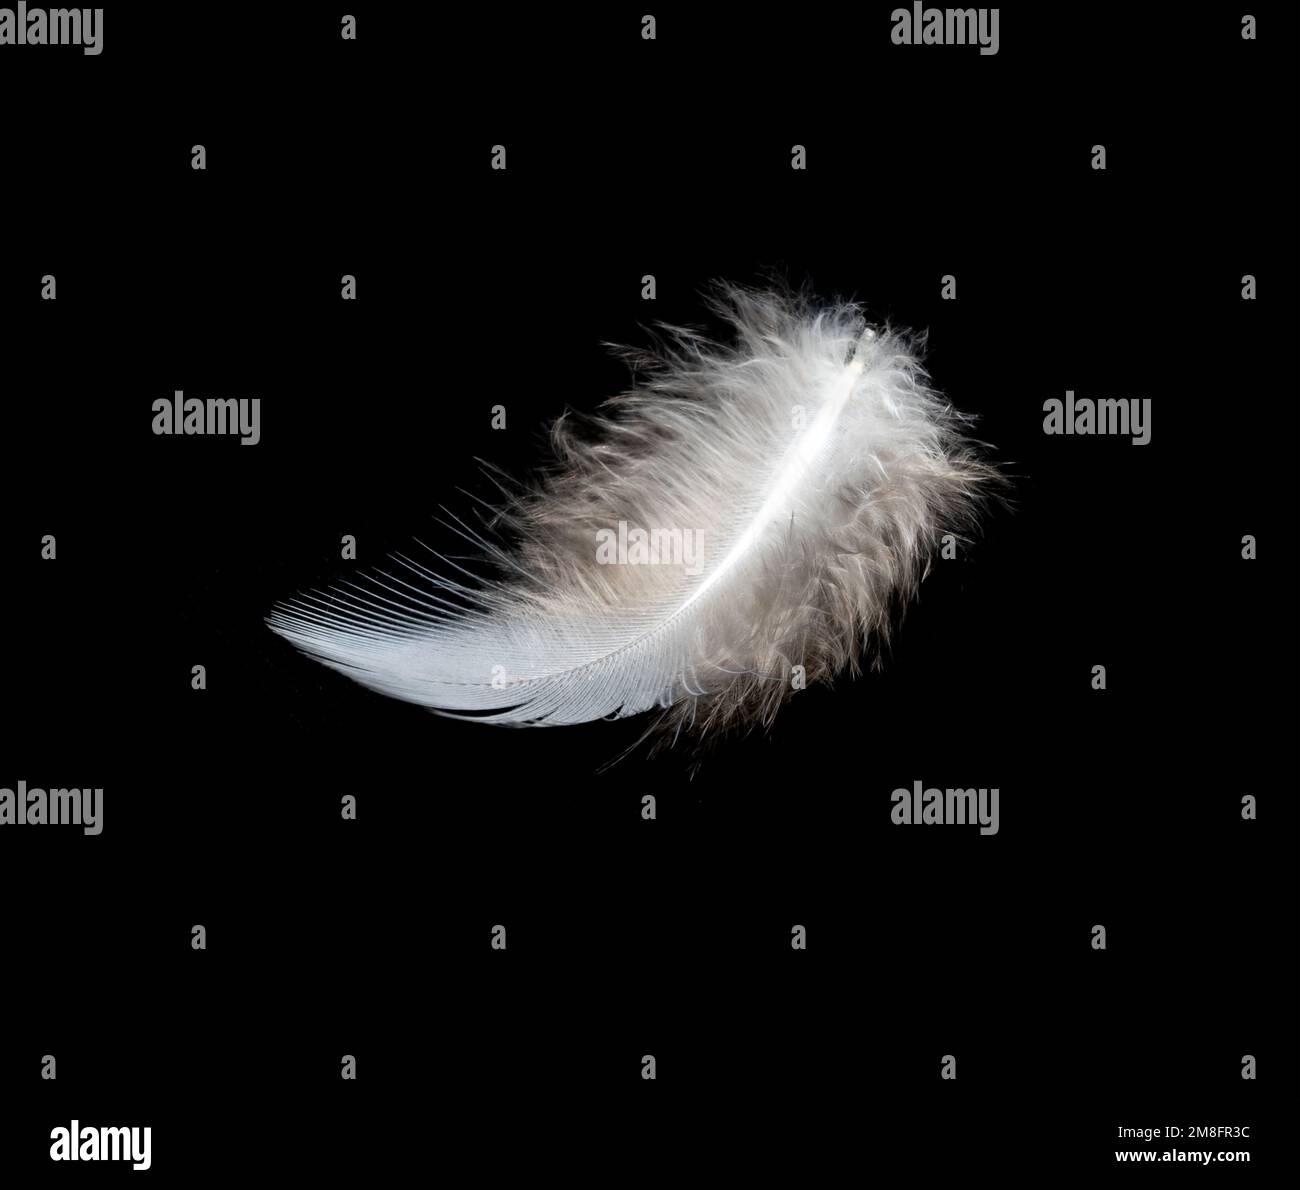 White feather on black background, isolate Stock Photo